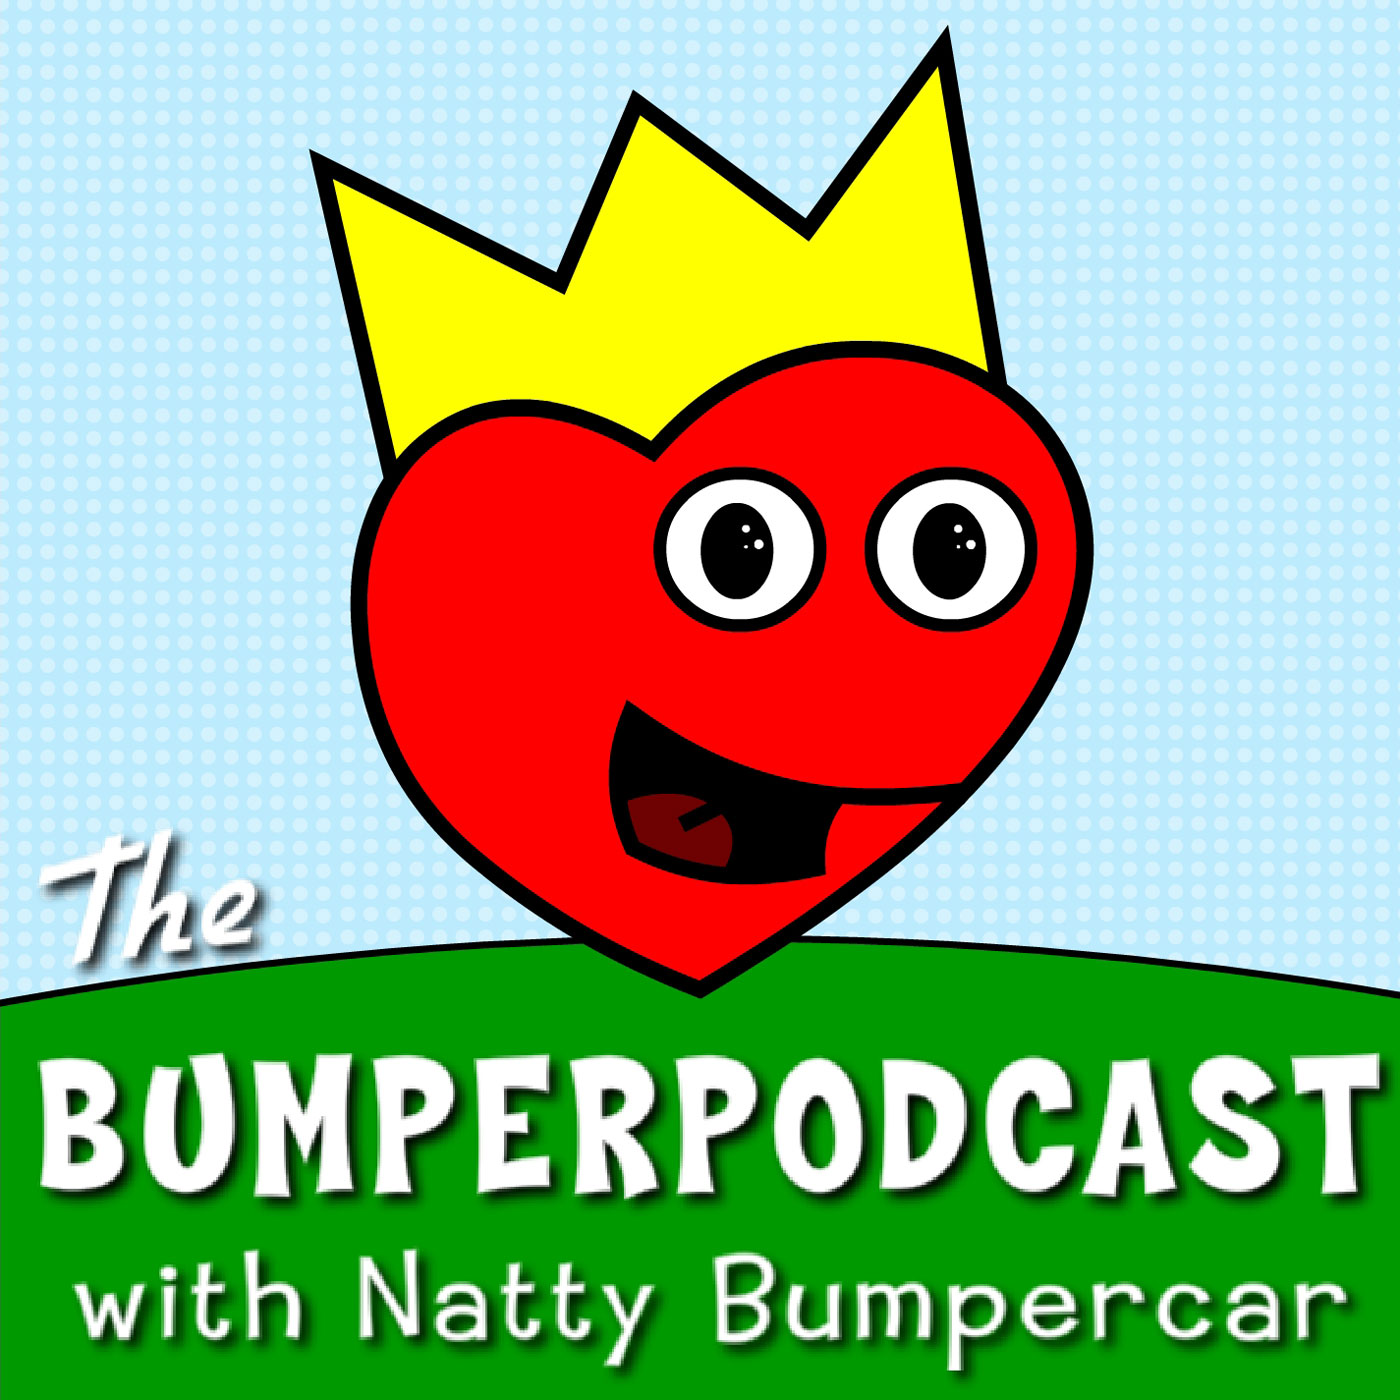 The Natty Bumpercar Bumperpodcast